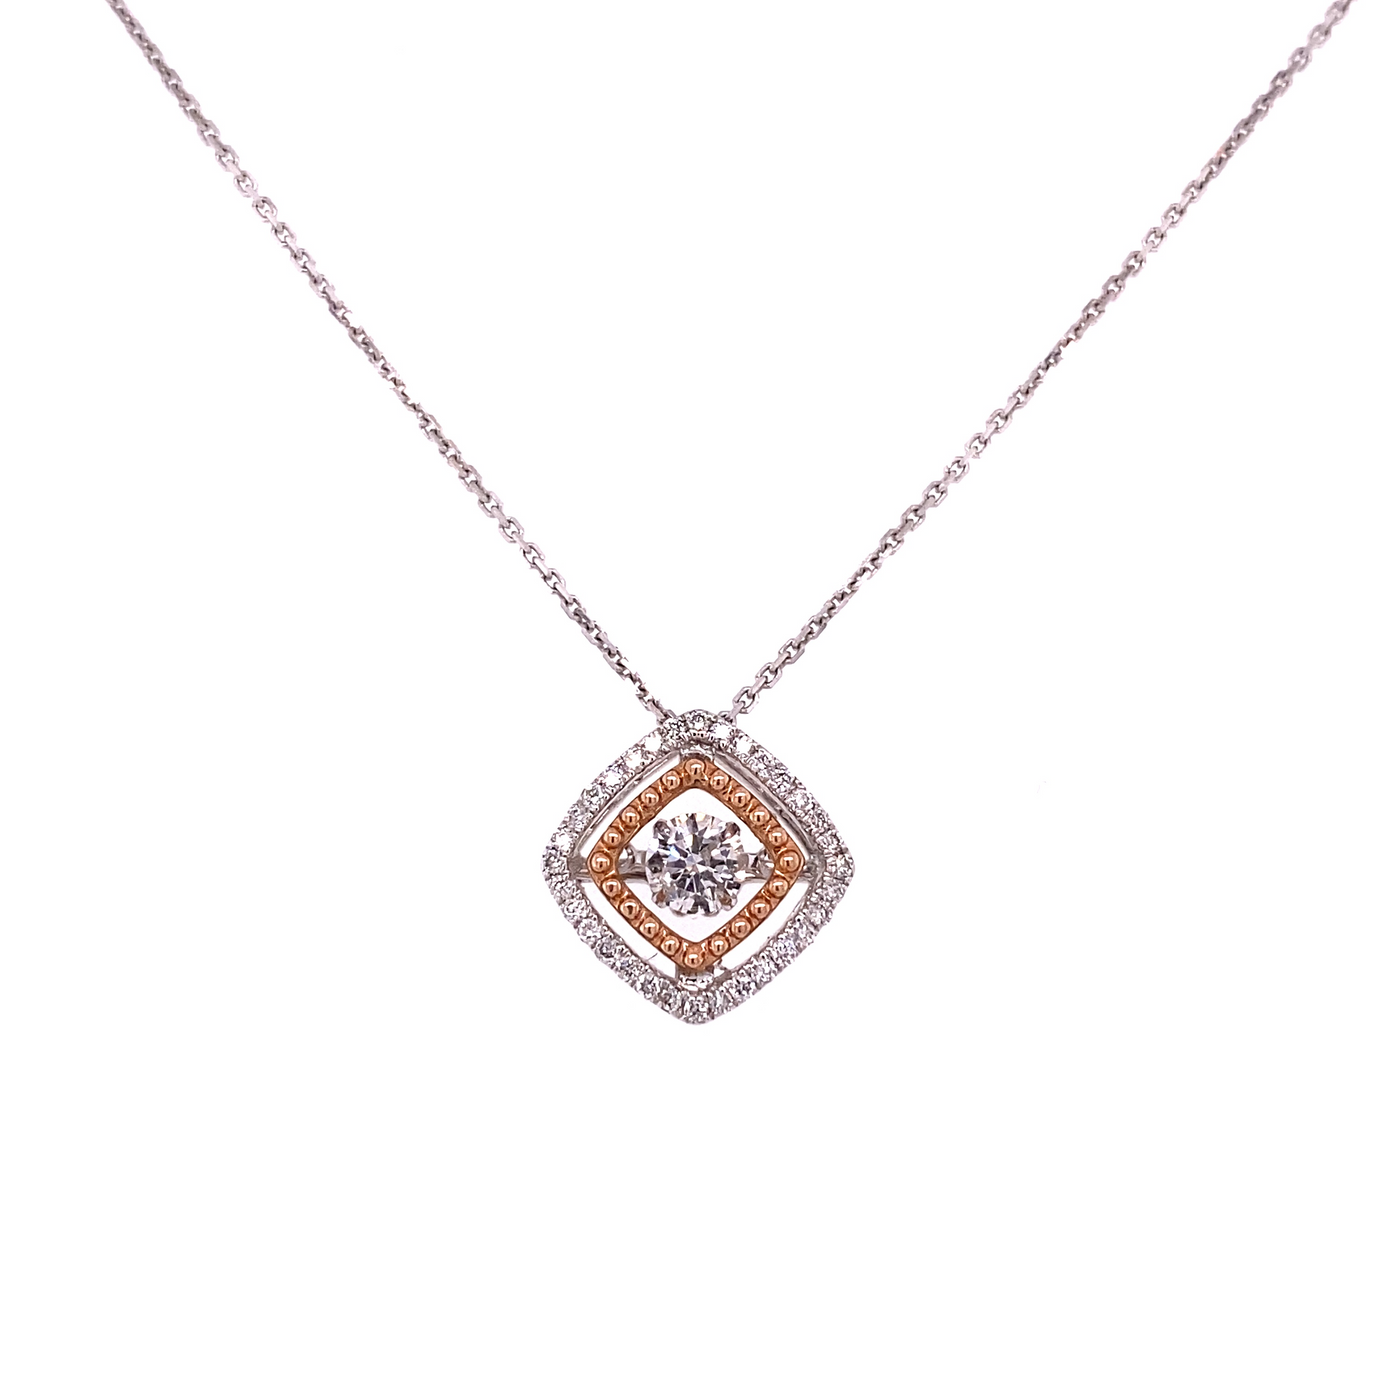 10 Karat White and Rose Gold Dancing Diamond Necklace